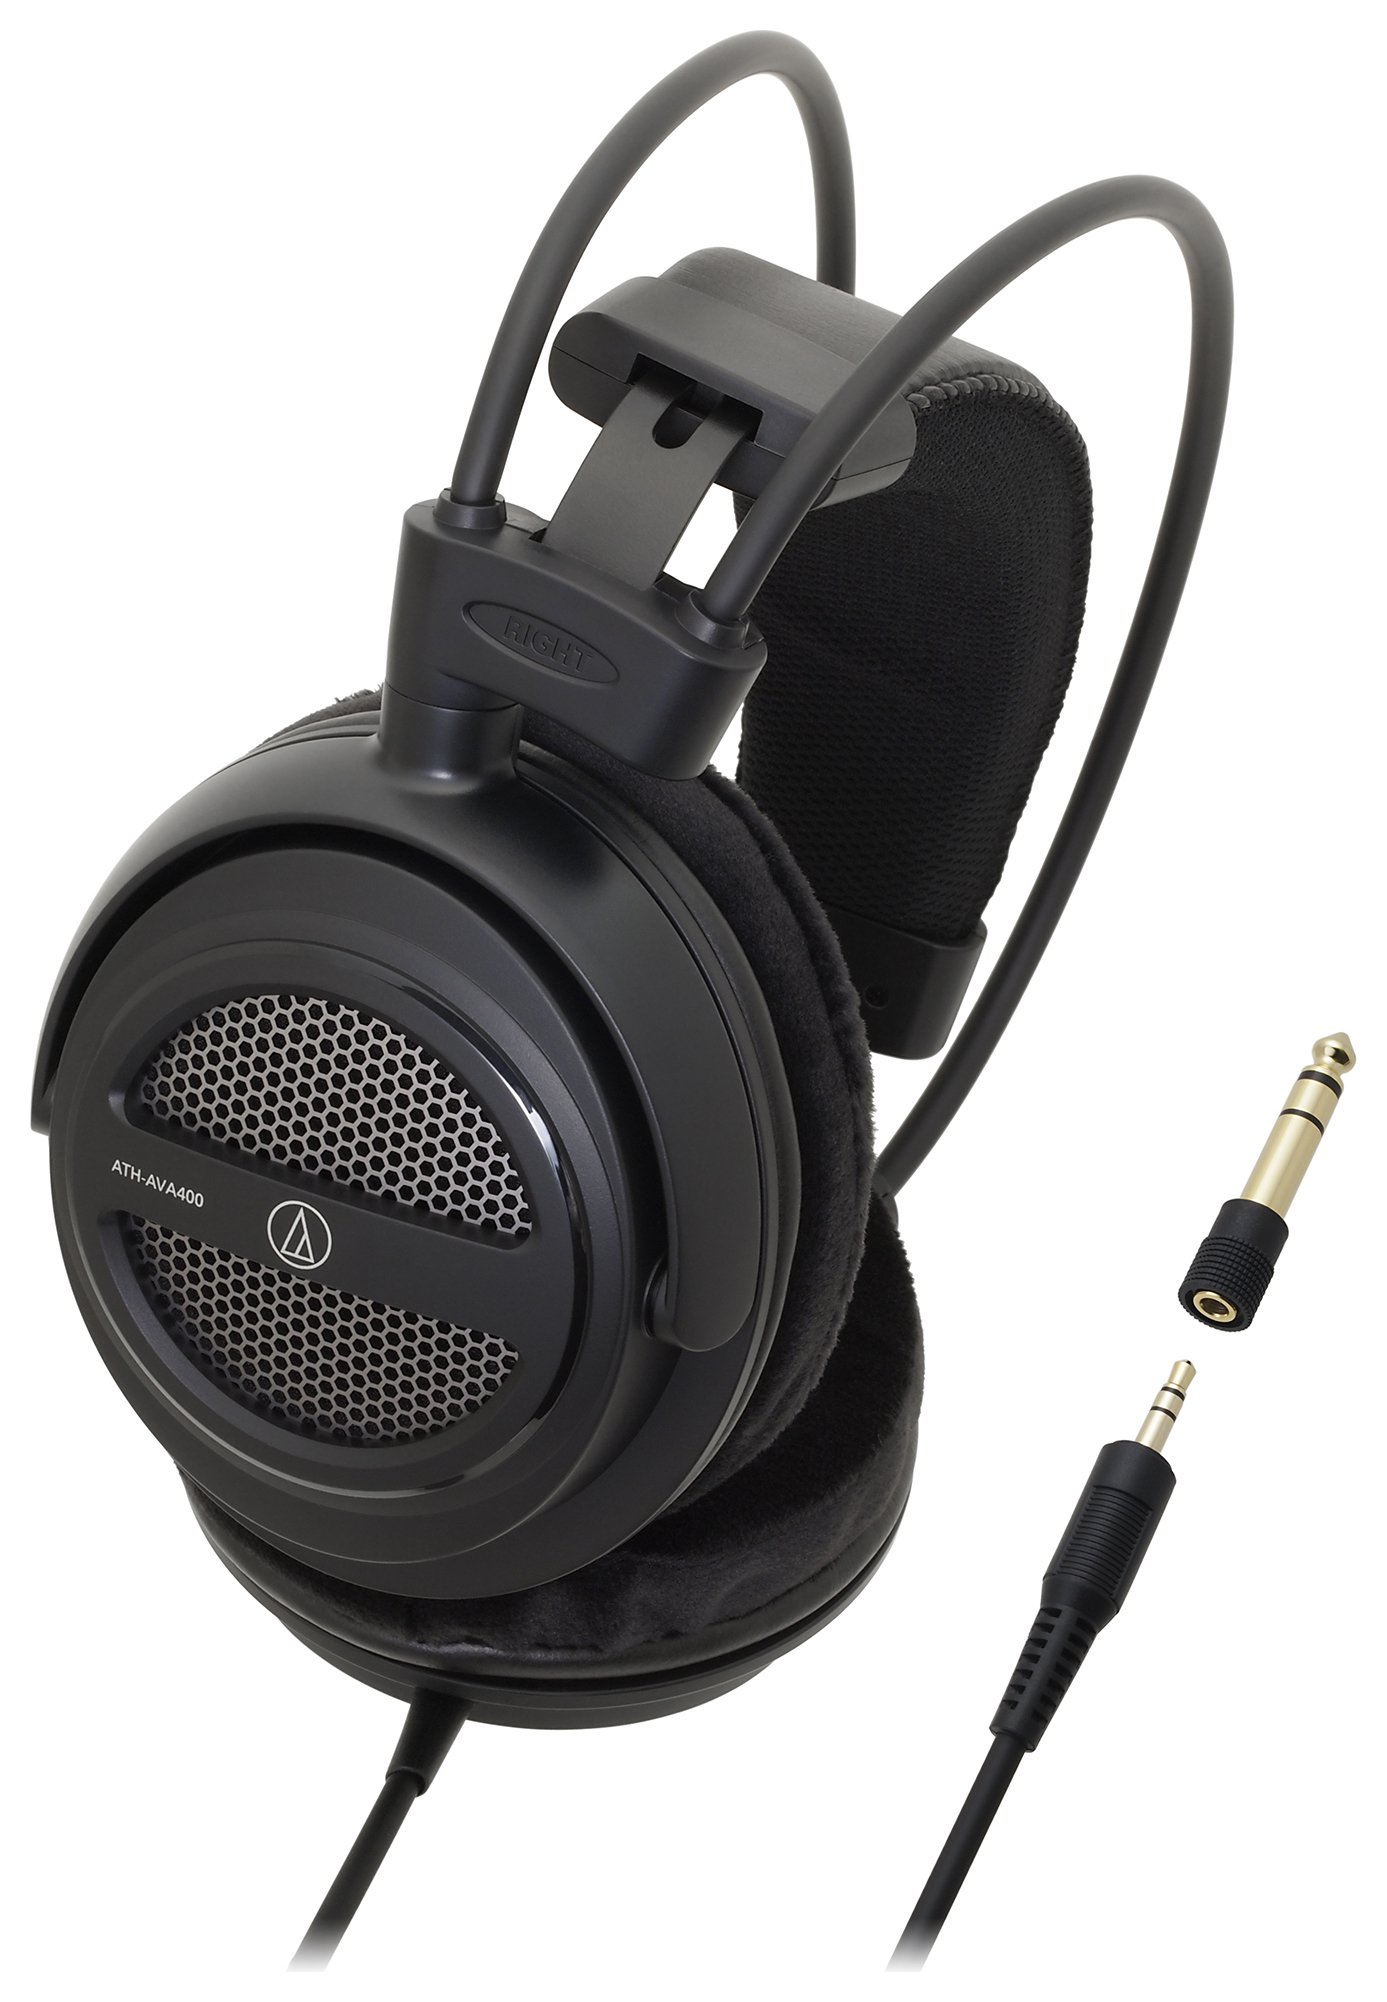 Audio Technica SonicPro ATHAVA400 On-Ear Headphones - Black